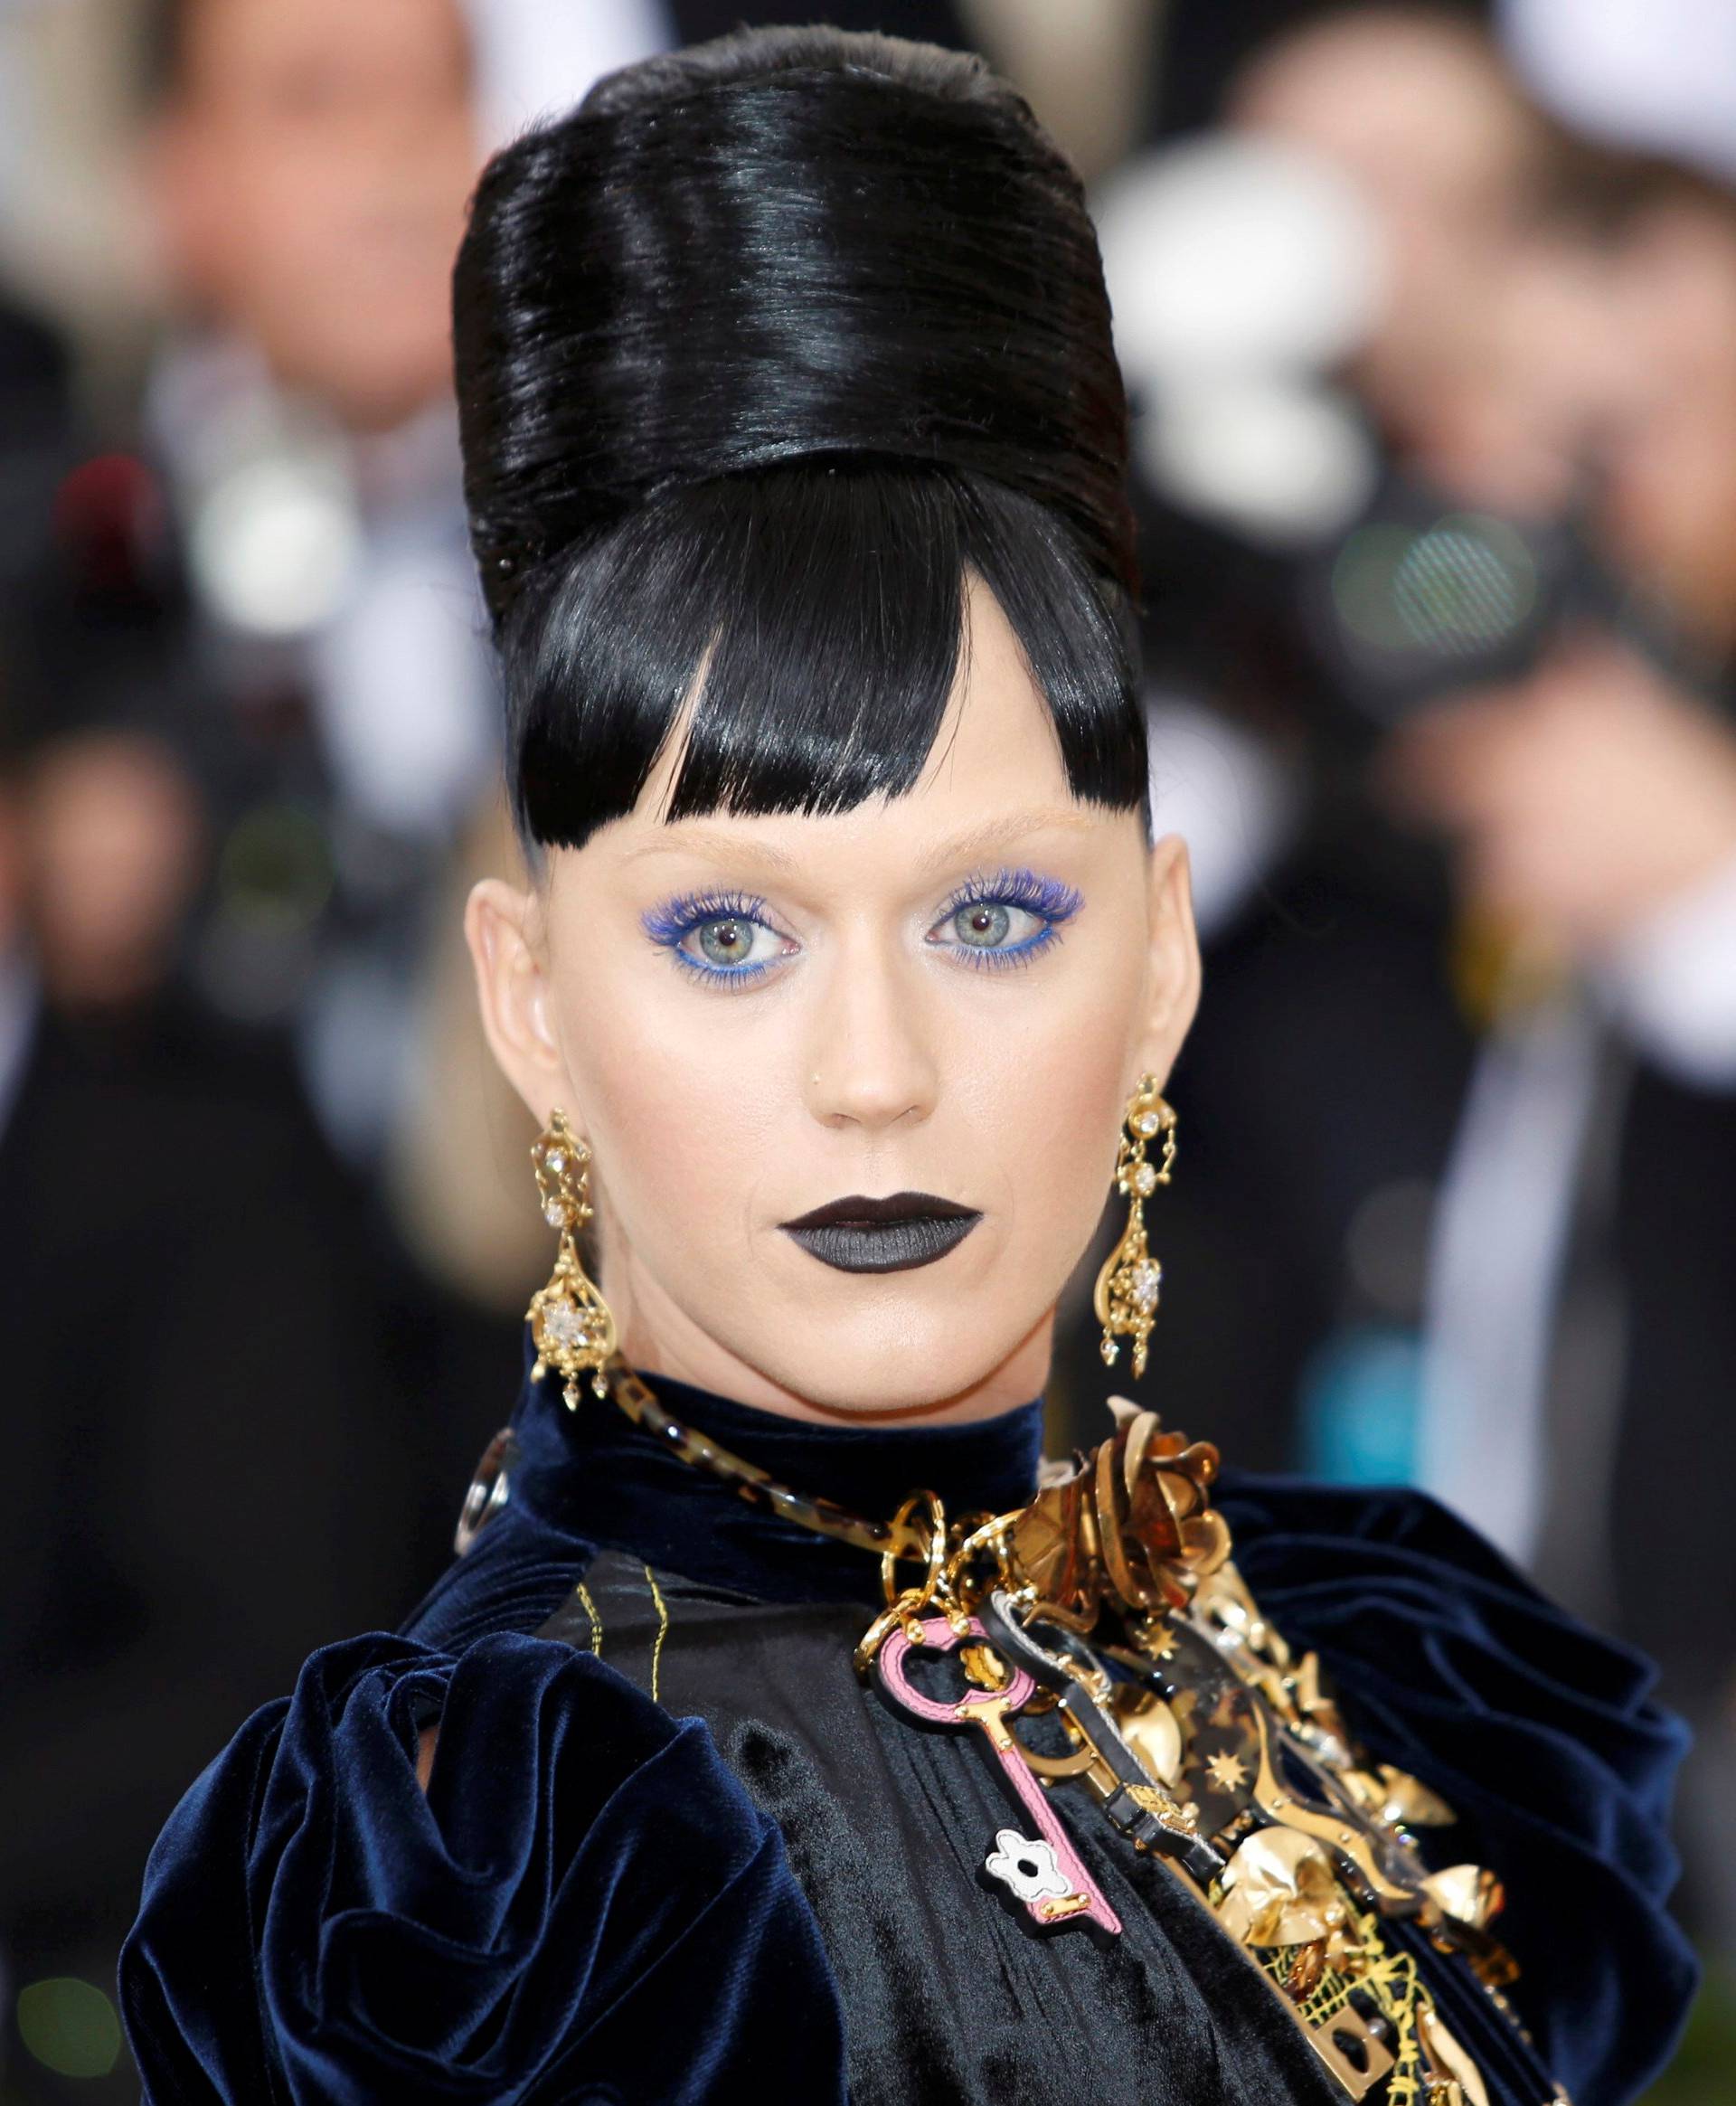 Singer-songwriter Katy Perry arrives at the Met Gala in New York